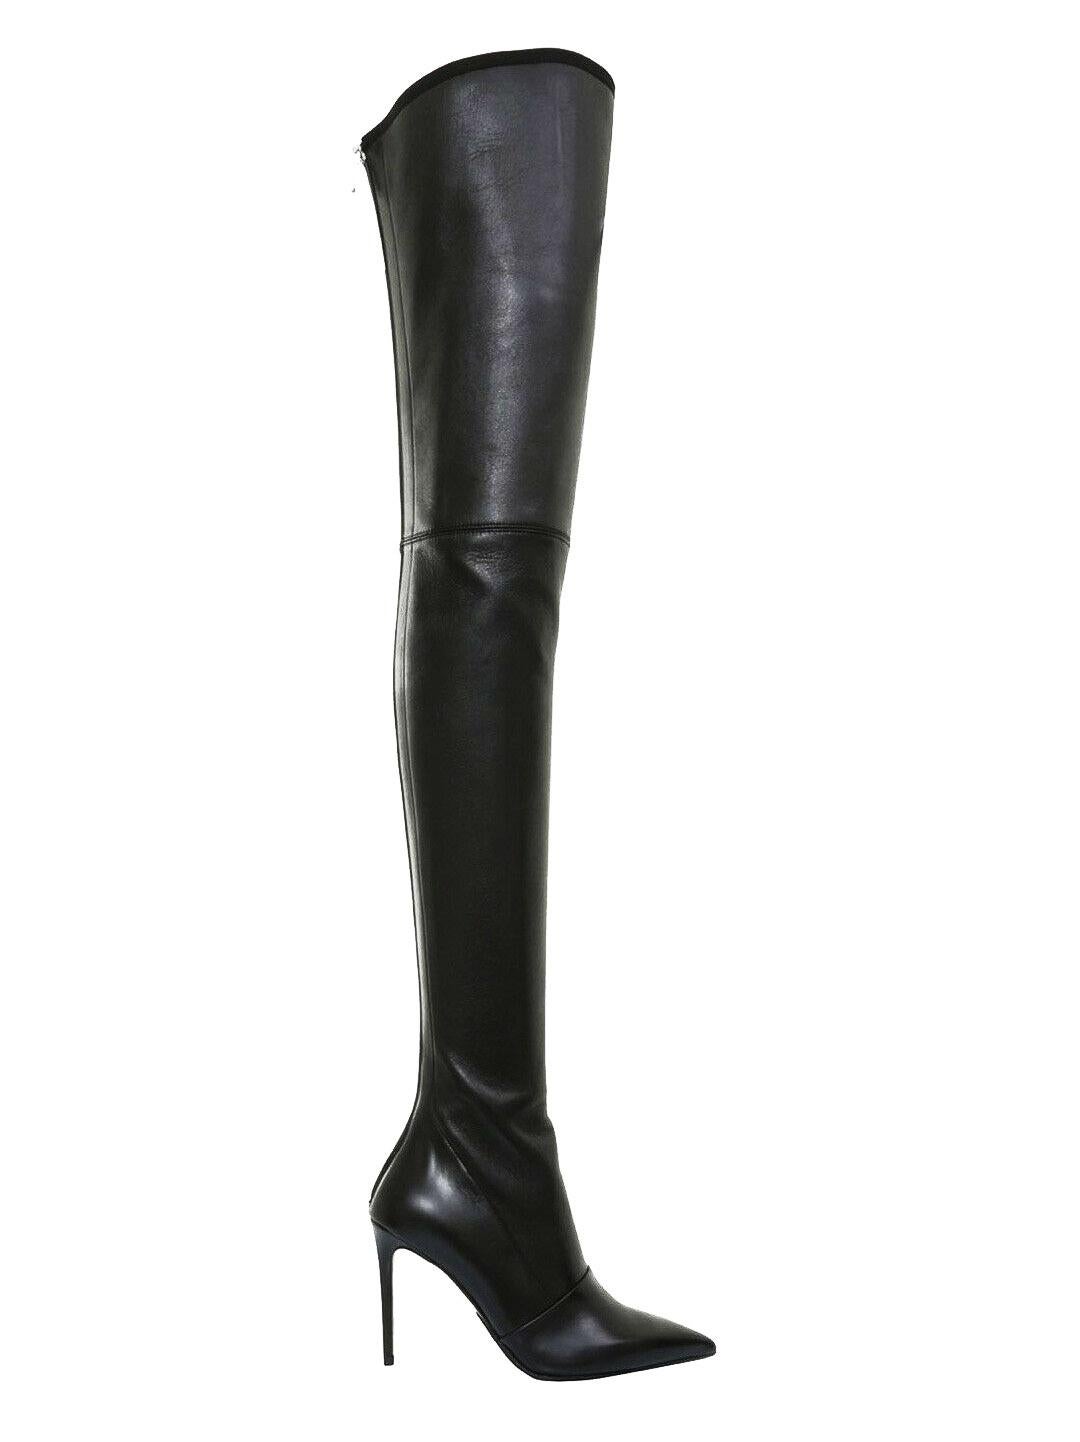 New Balmain Black Stretch Leather Thigh High Stiletto Heel Boots 6 7 7. ...